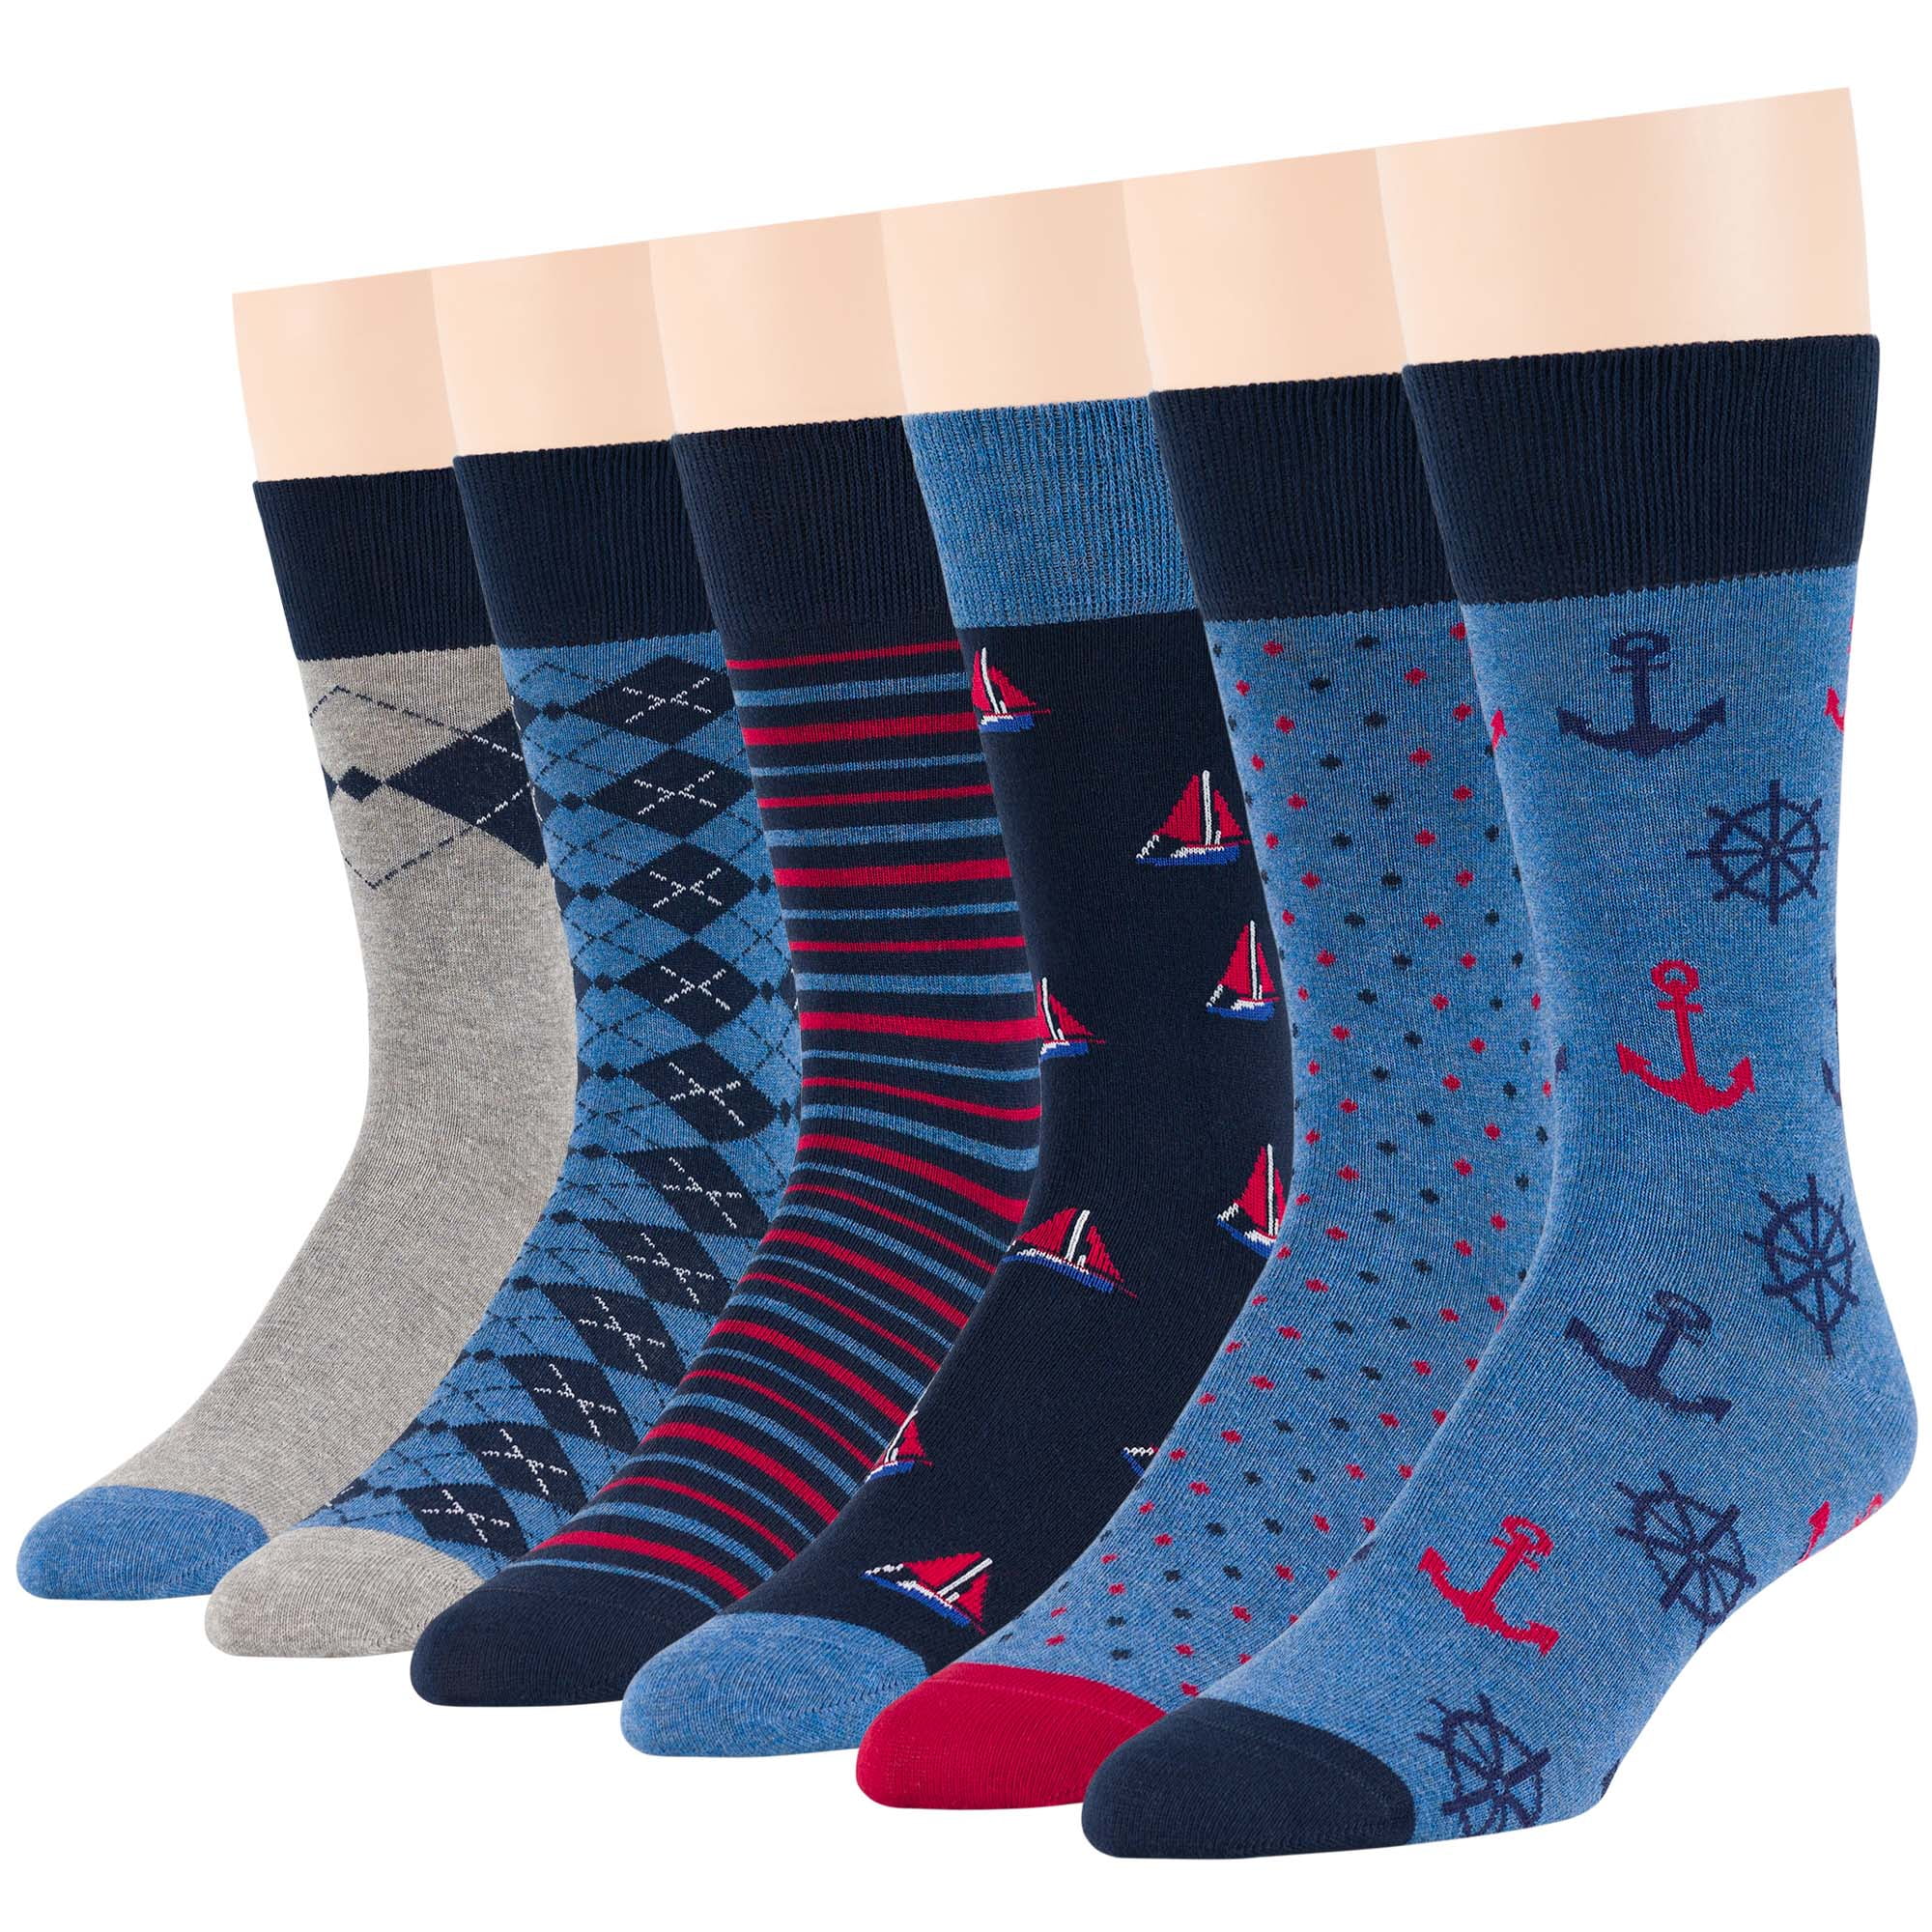 7Bigstars Kingdom Men's Dress Socks Cotton -6 pack- Novelty Casual Seamless Sail, Anchor, Dot, Striped Sock Size 10-13 Shoe Size 9-12 L Denim Blue, Dark Navy, Grey (A41)